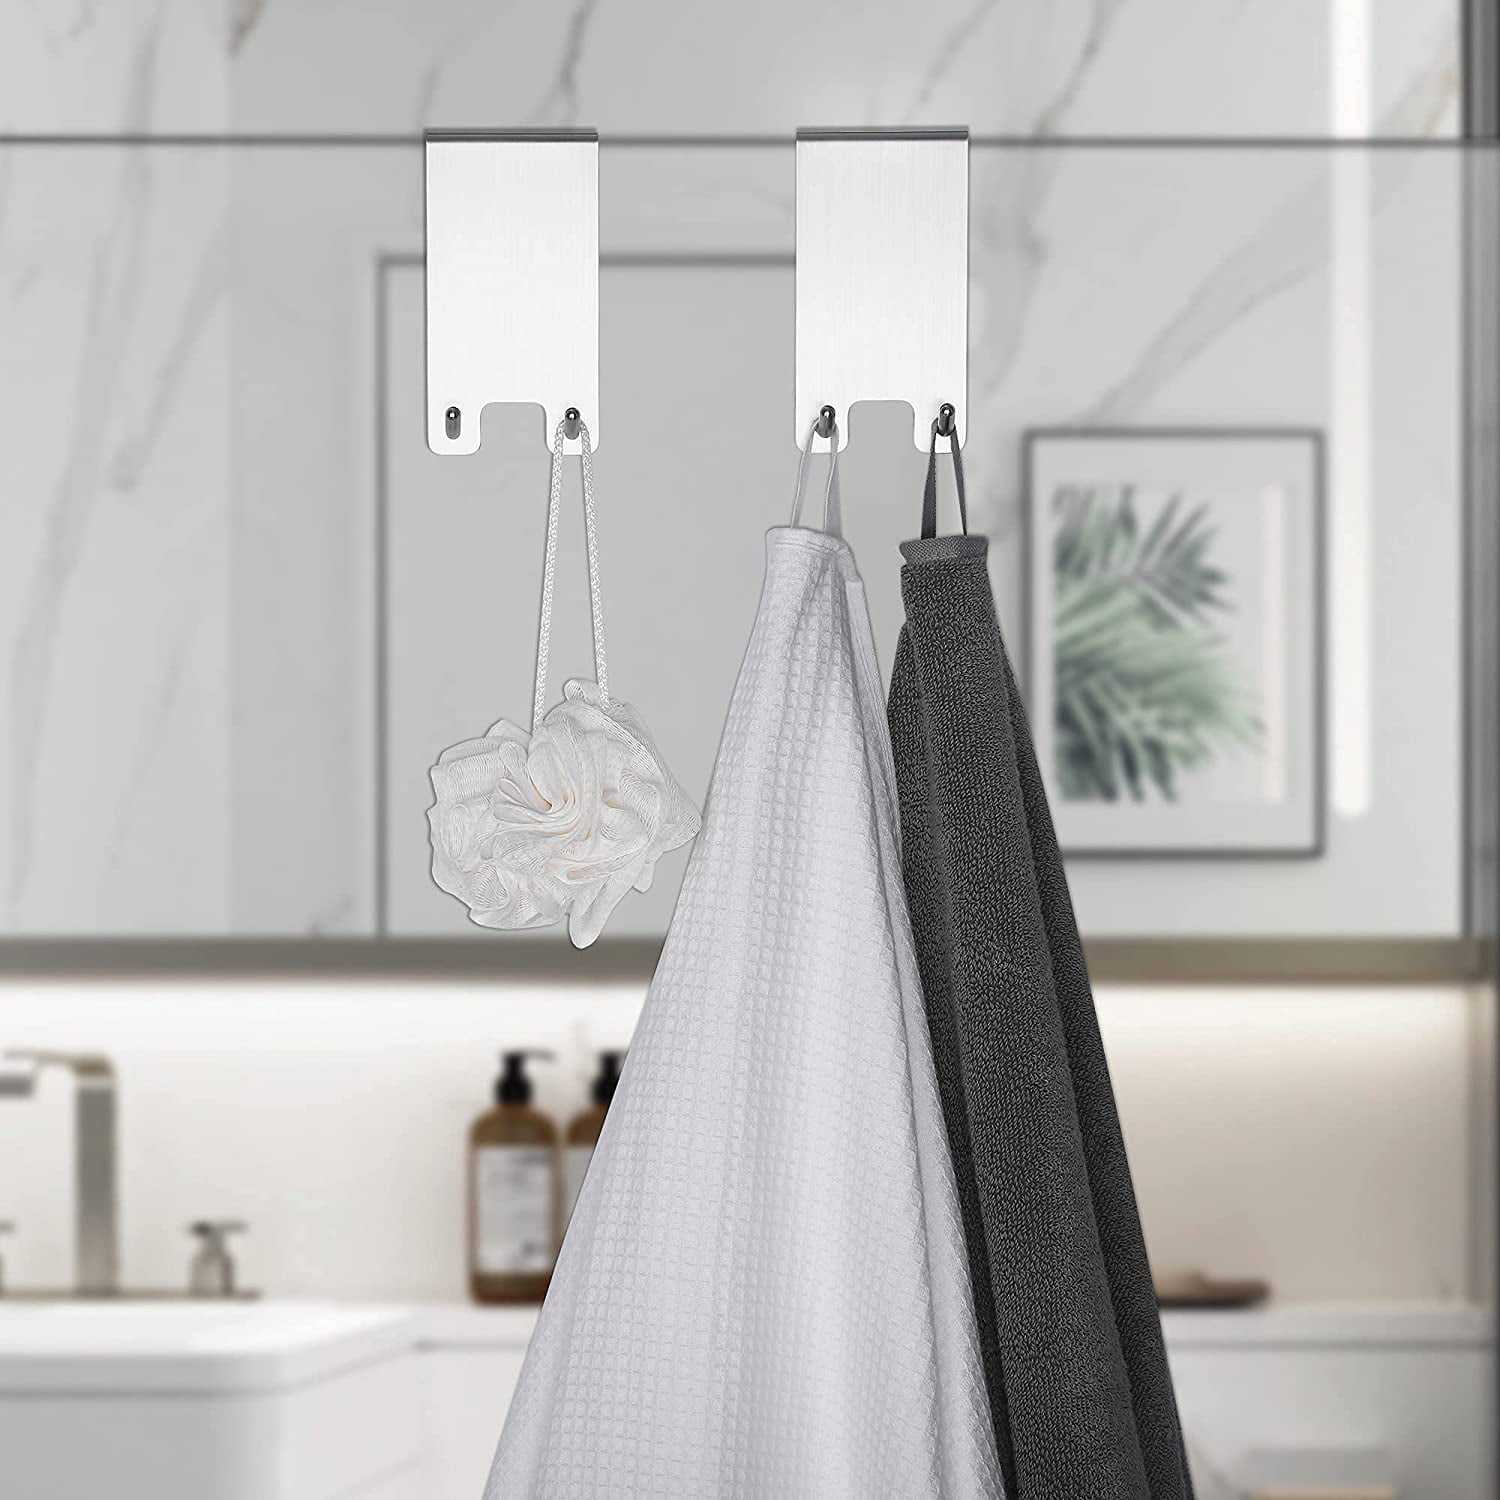 Details about    Shower Door Hooks Towel Hooks for Bathroom Frameless Glass Shower 2-Pack 